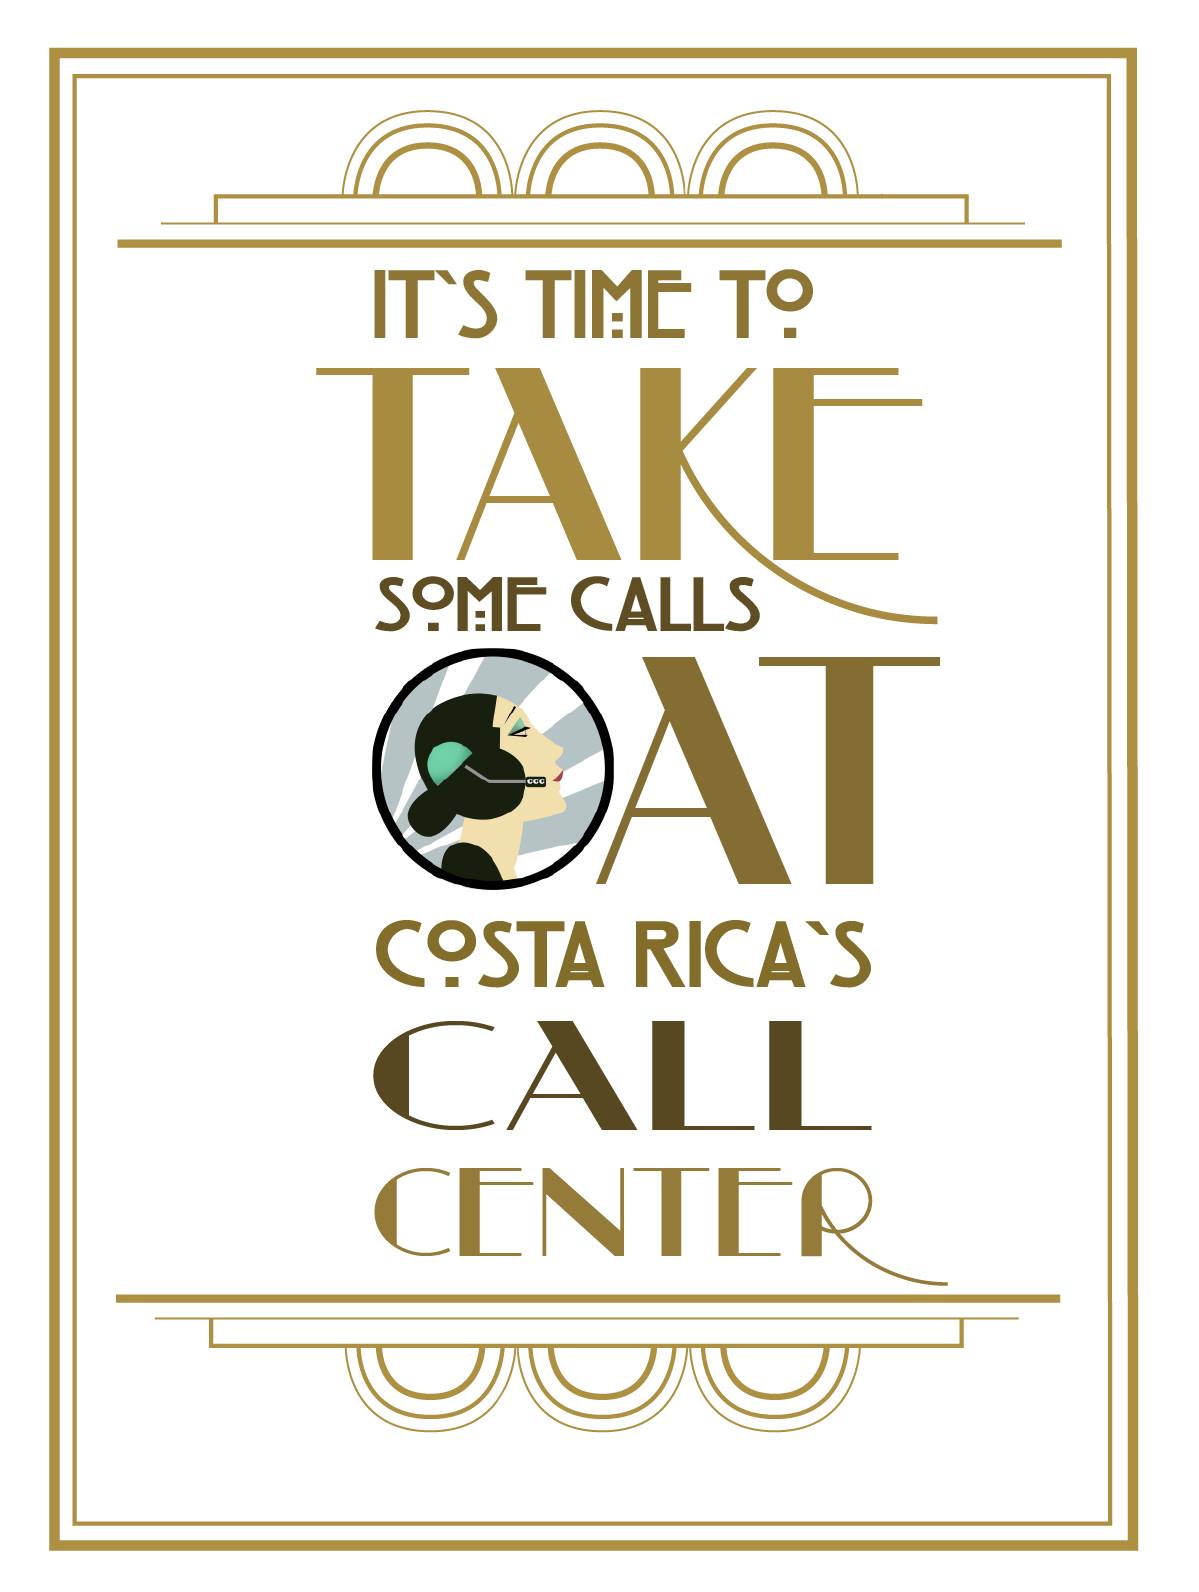 CALL CENTERS BILINGUAL TELEMARKETING JOB COSTA RICA.jpg  by richardblank